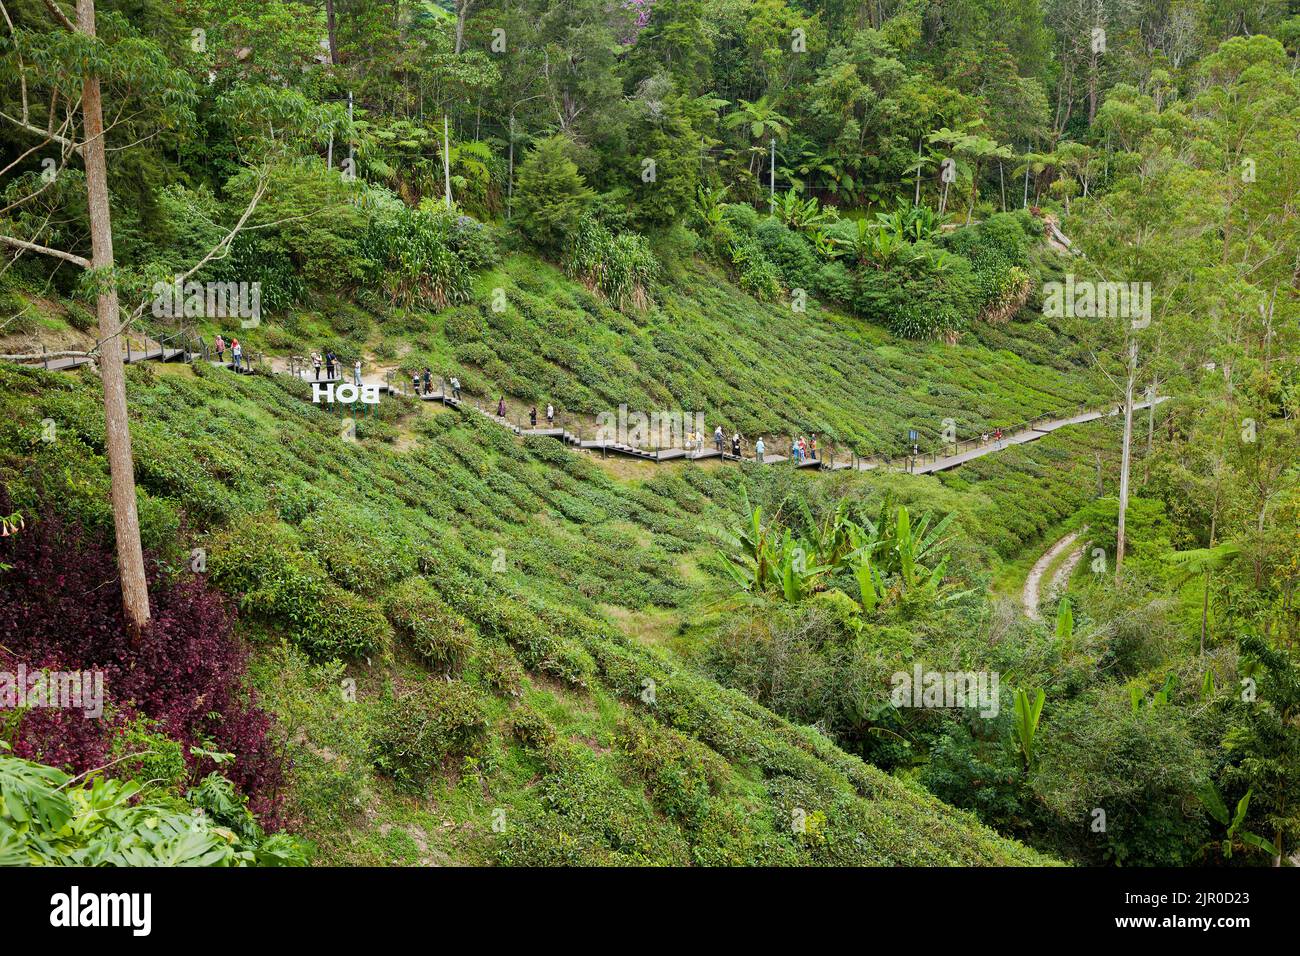 BOH tea plantation, Cameron Highlands. Tourists walking along the pathway to the tourist centre & teashop.Malaysia Stock Photo